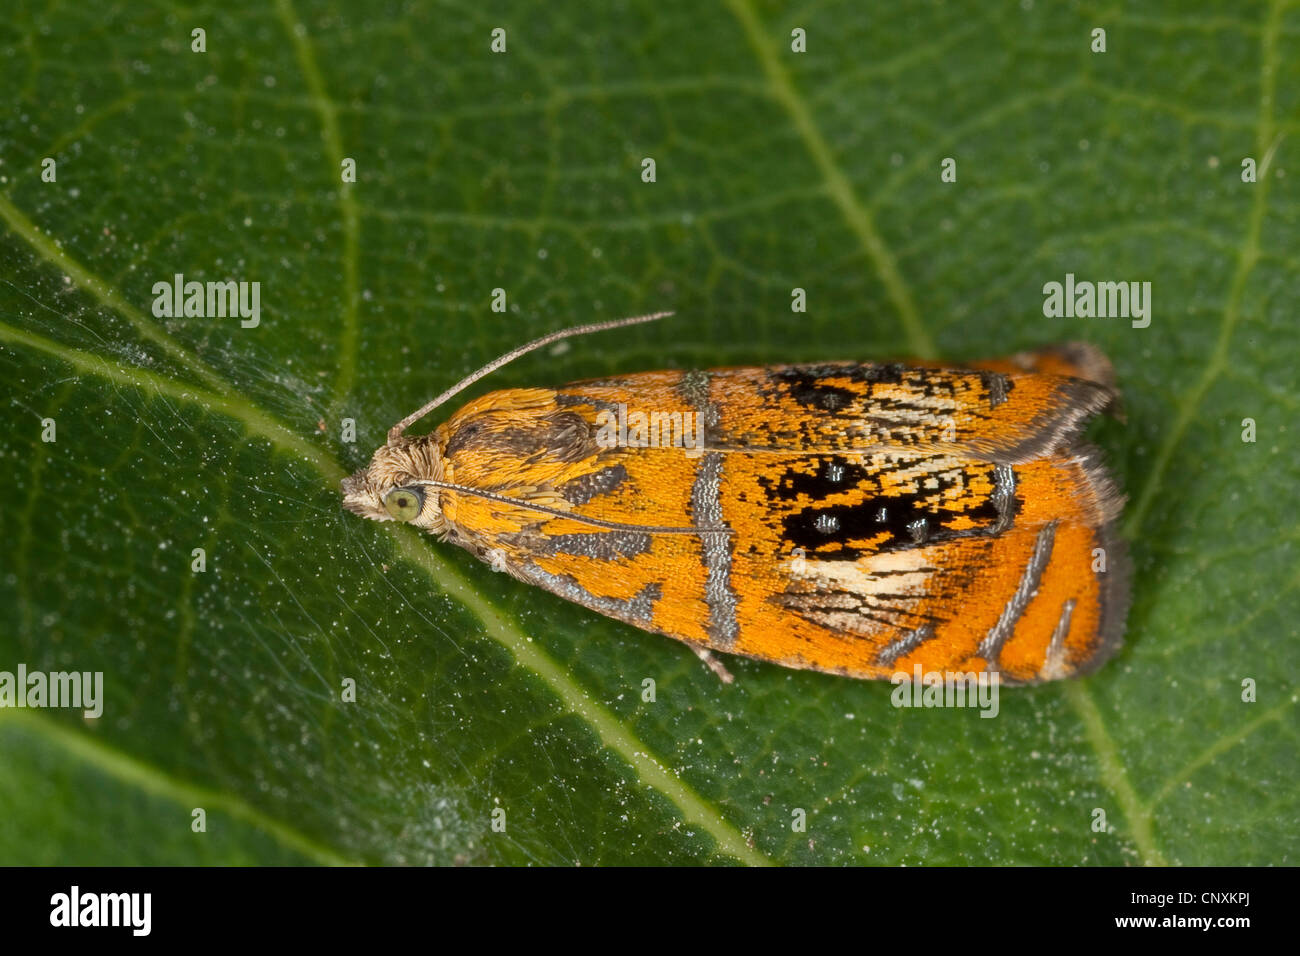 Tortrix moth, Olethreutes arcuella (Olethreutes arcuella, Olethreutes arcuana), sitting on a leaf, Germany Stock Photo